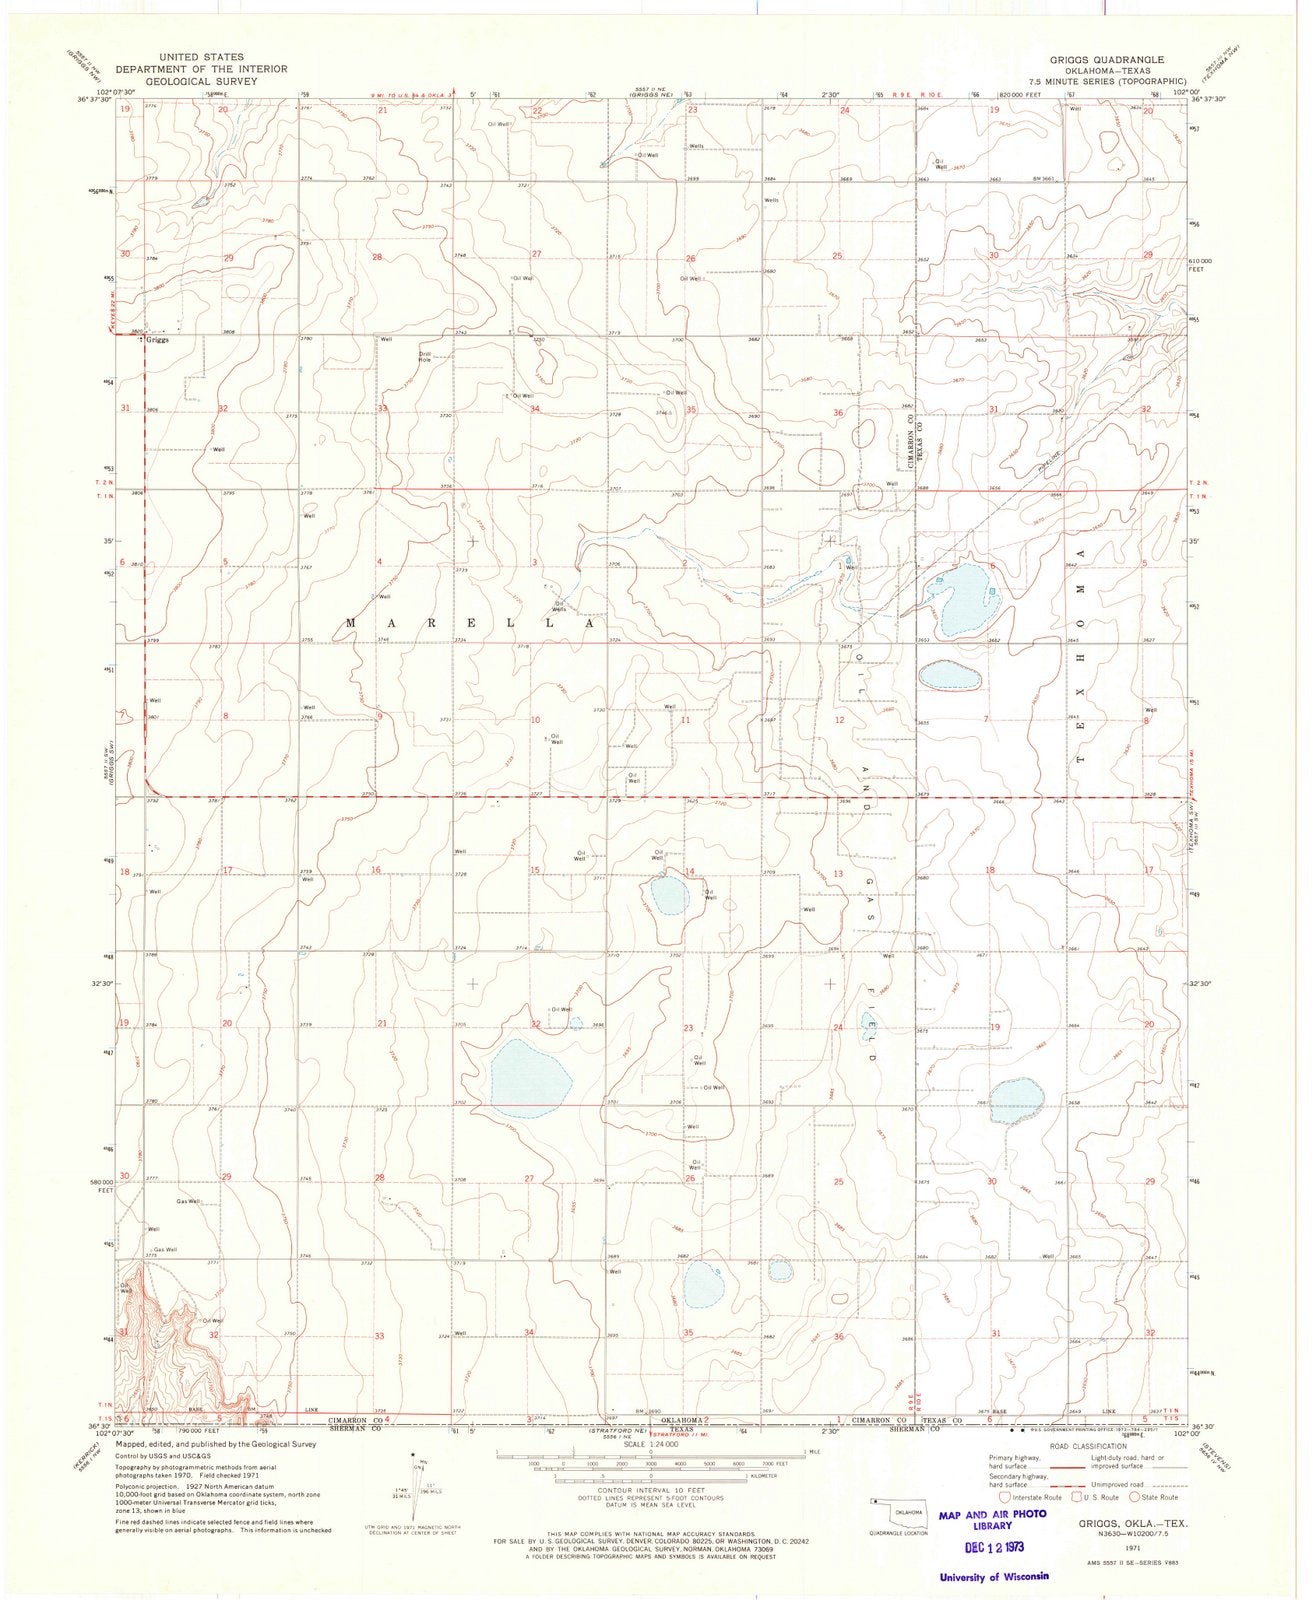 1971 Griggs, OK - Oklahoma - USGS Topographic Map v4